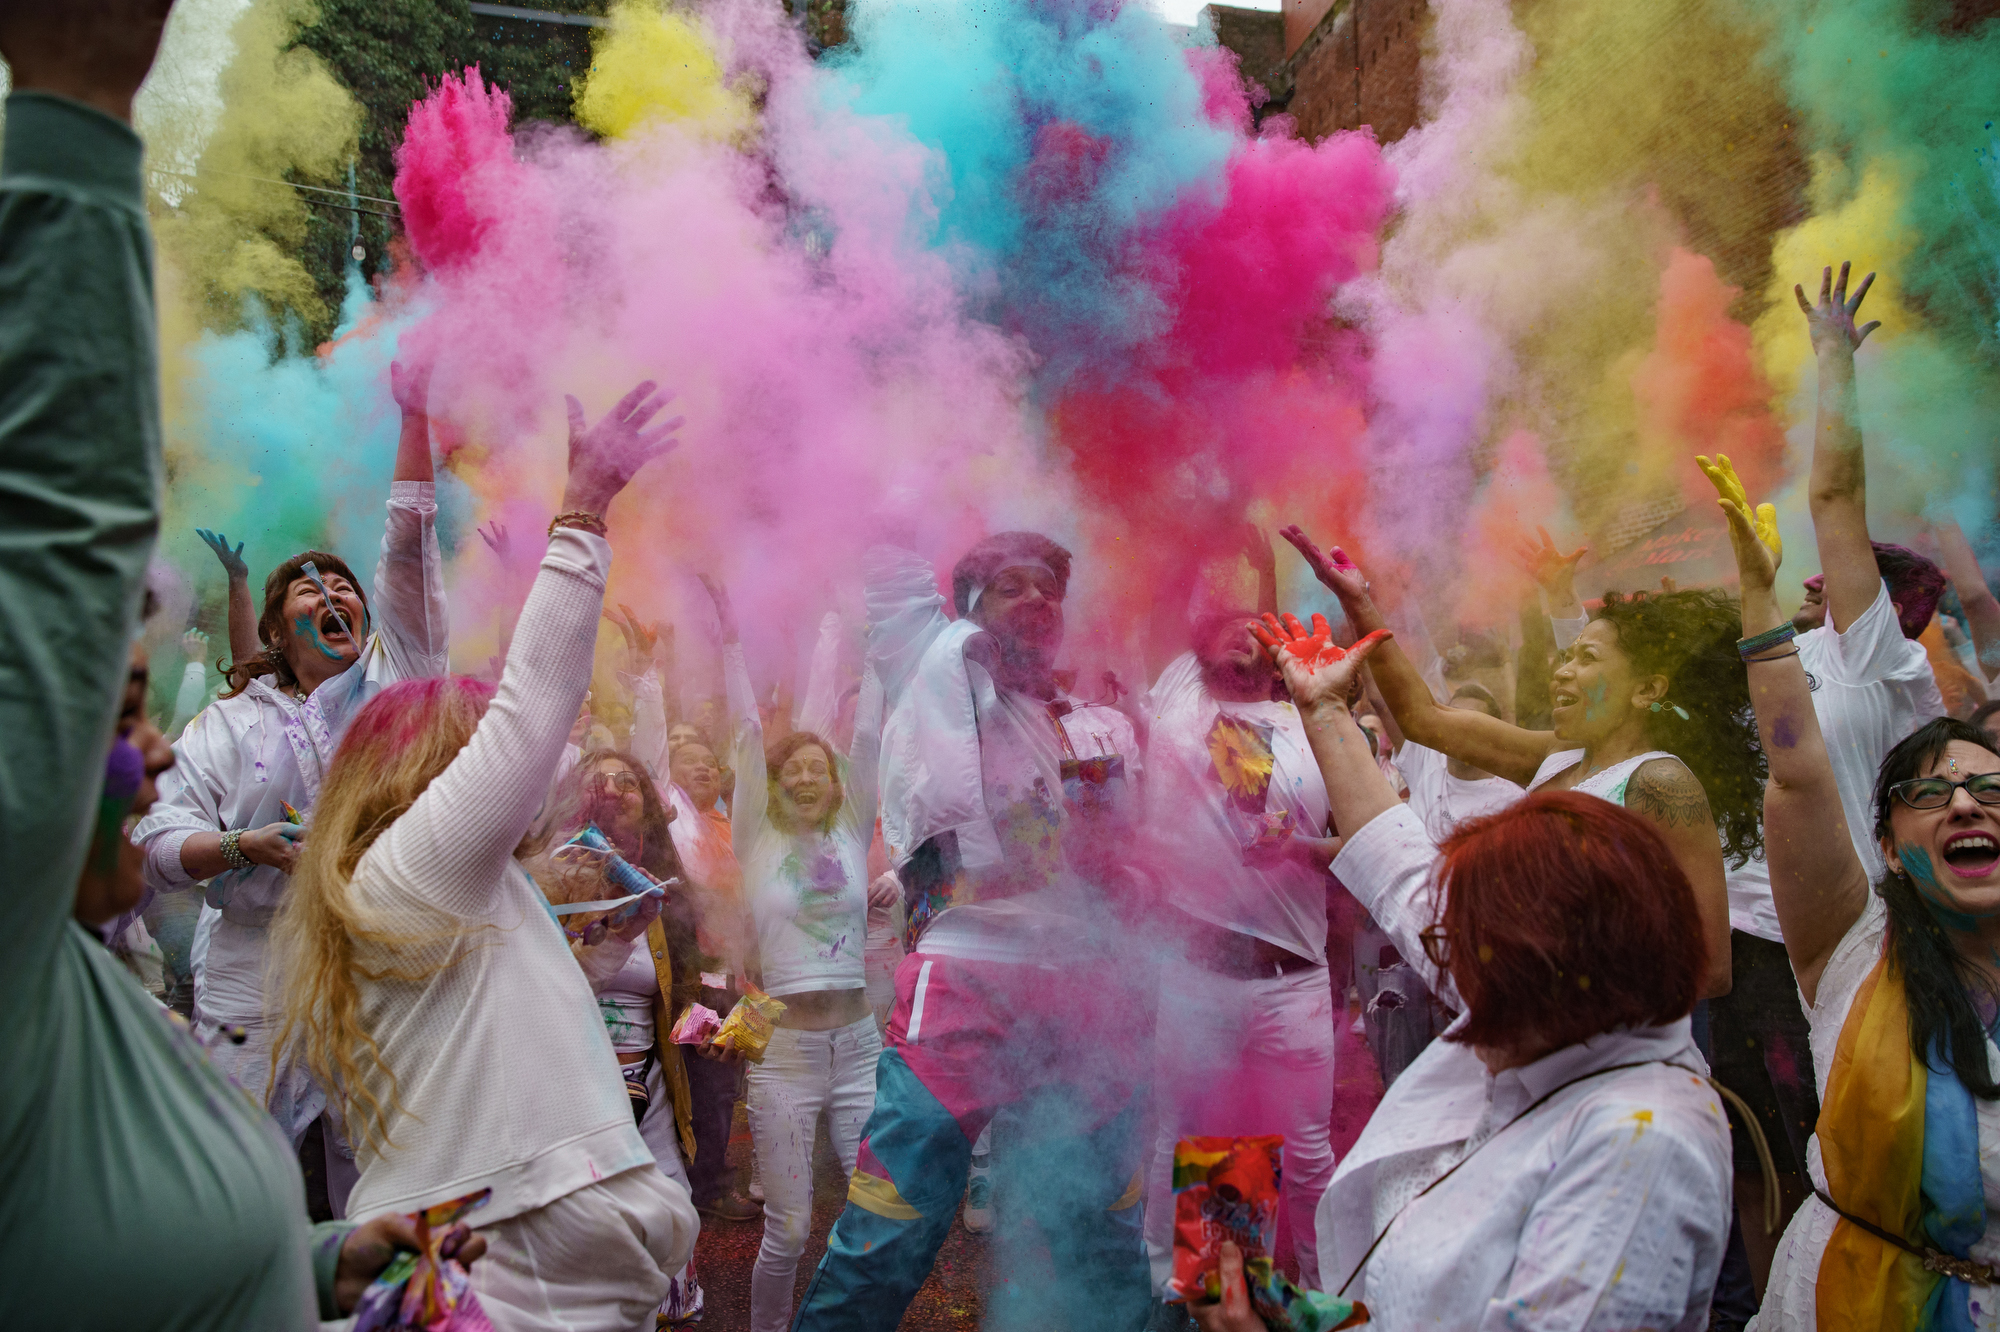 Colored powder flies as Hindus celebrate Holi